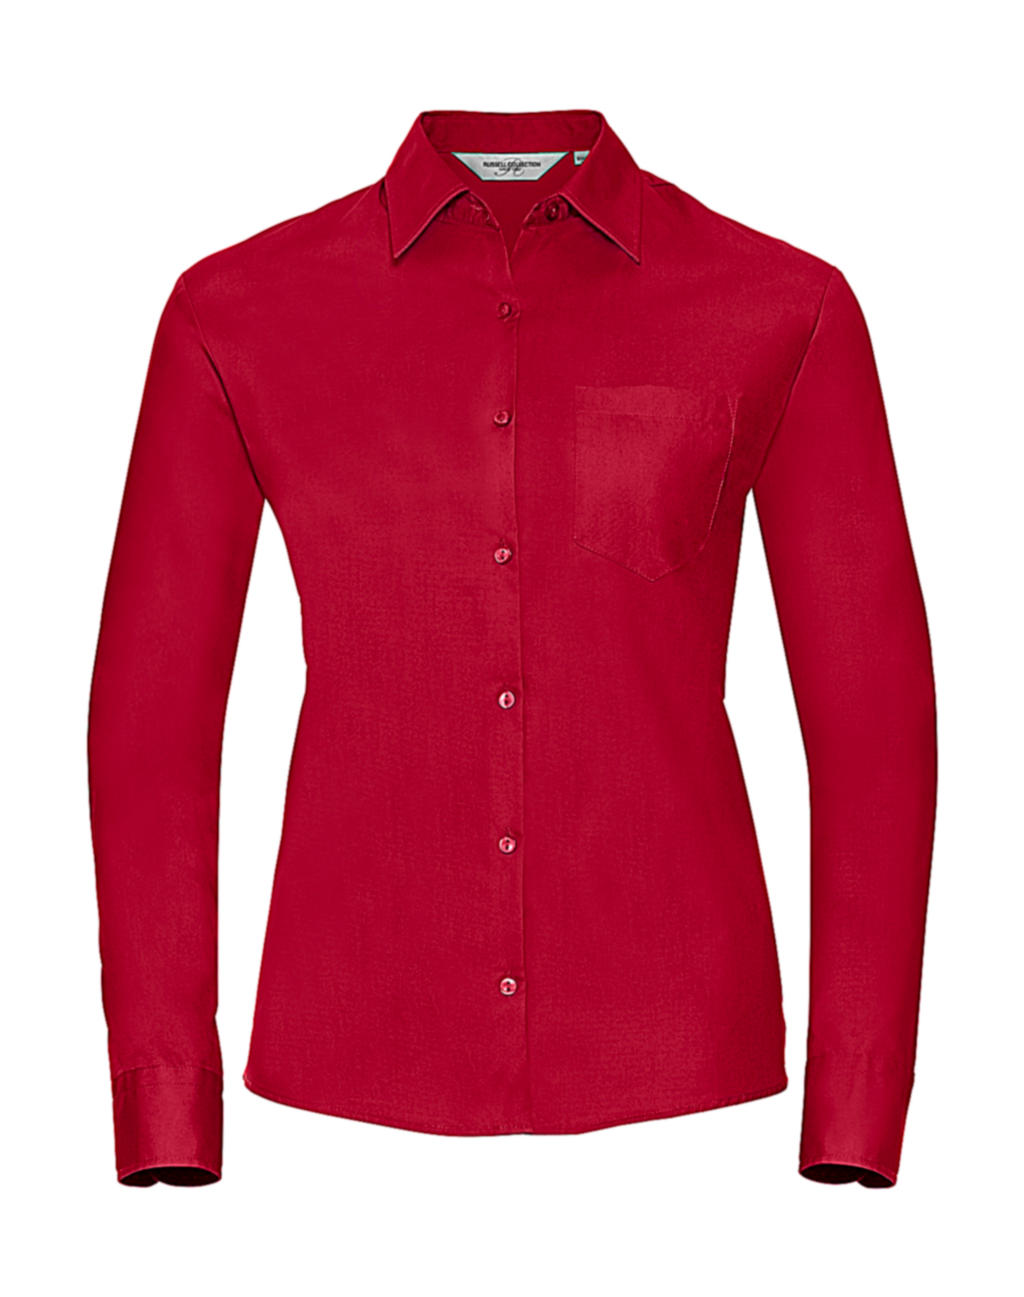  Ladies Cotton Poplin Shirt LS in Farbe Classic Red